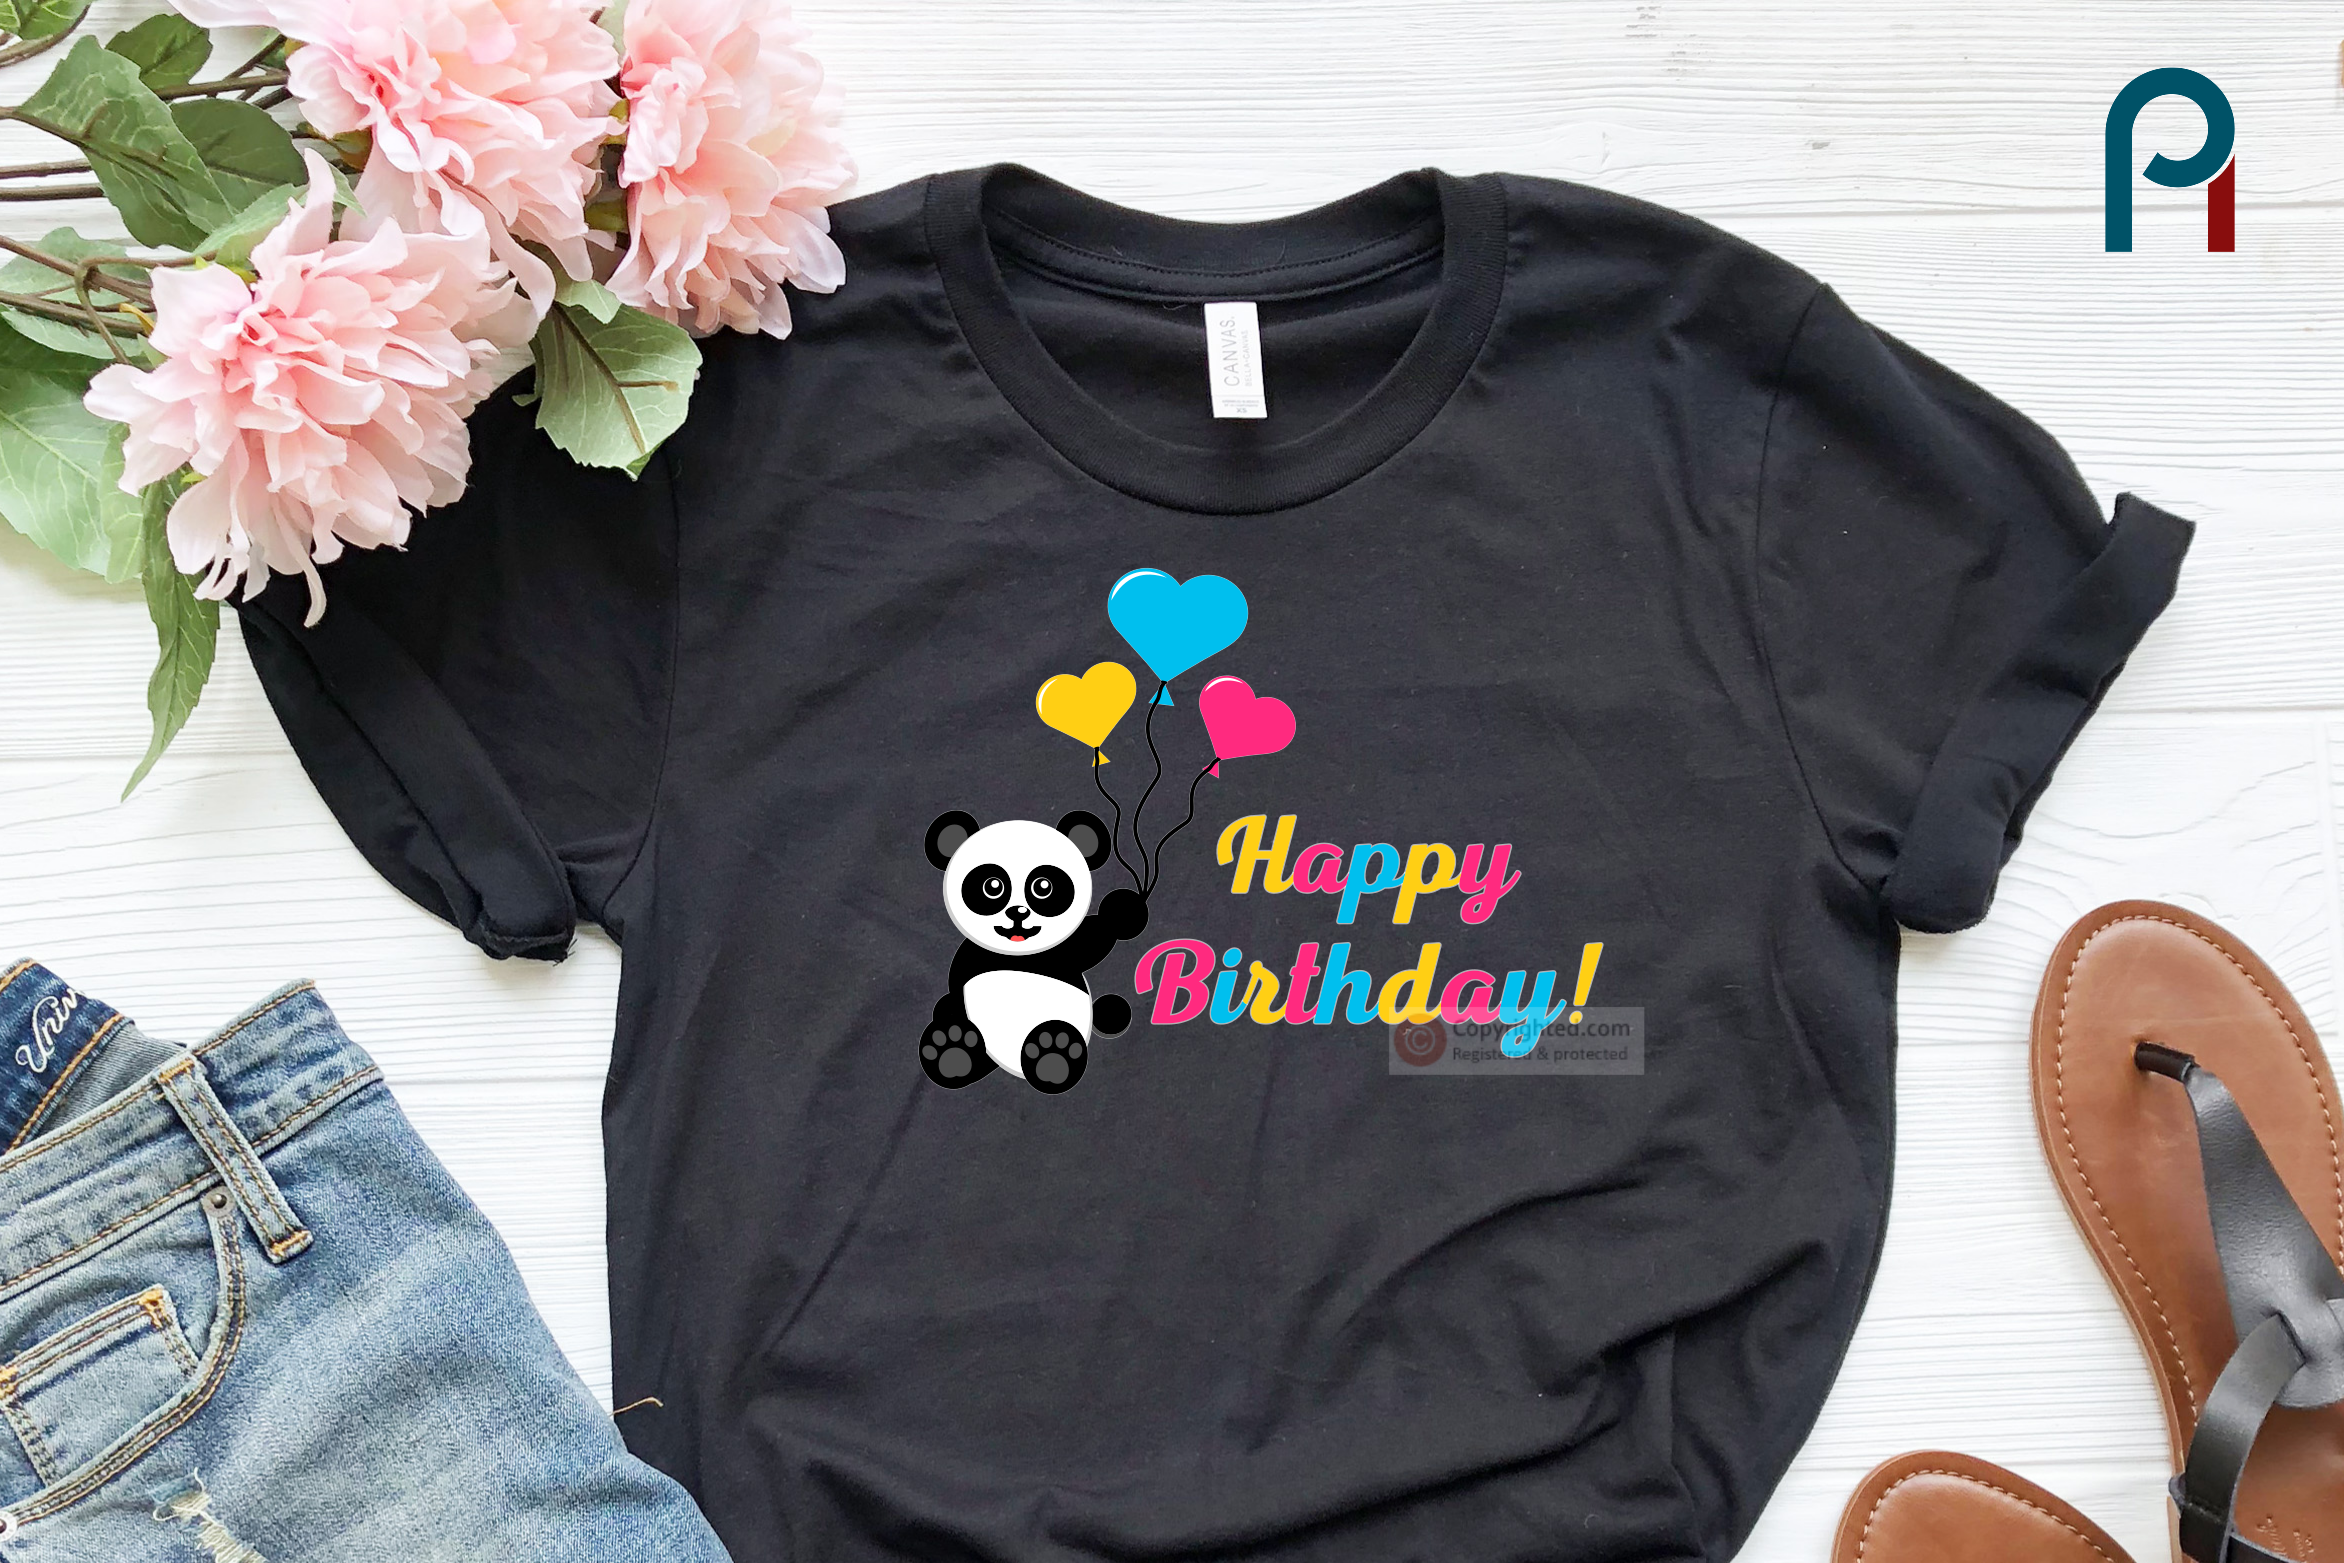 Download panda svg, panda svg file, happy birthday svg